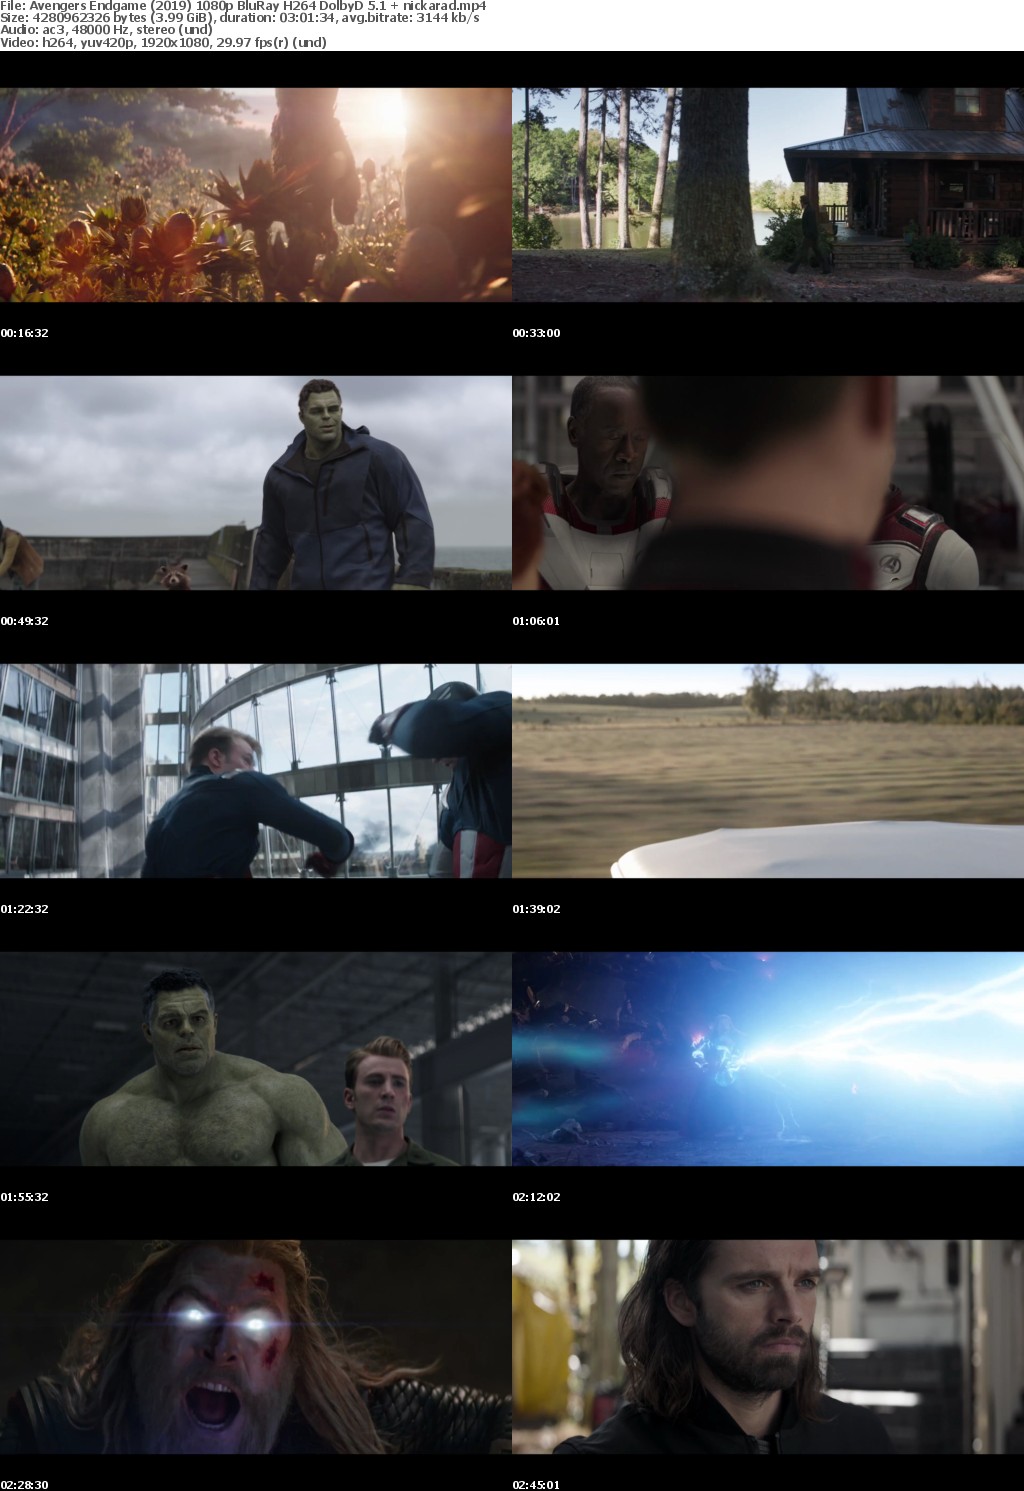 Avengers Endgame (2019) 1080p BluRay H264 DolbyD 5 1 nickarad